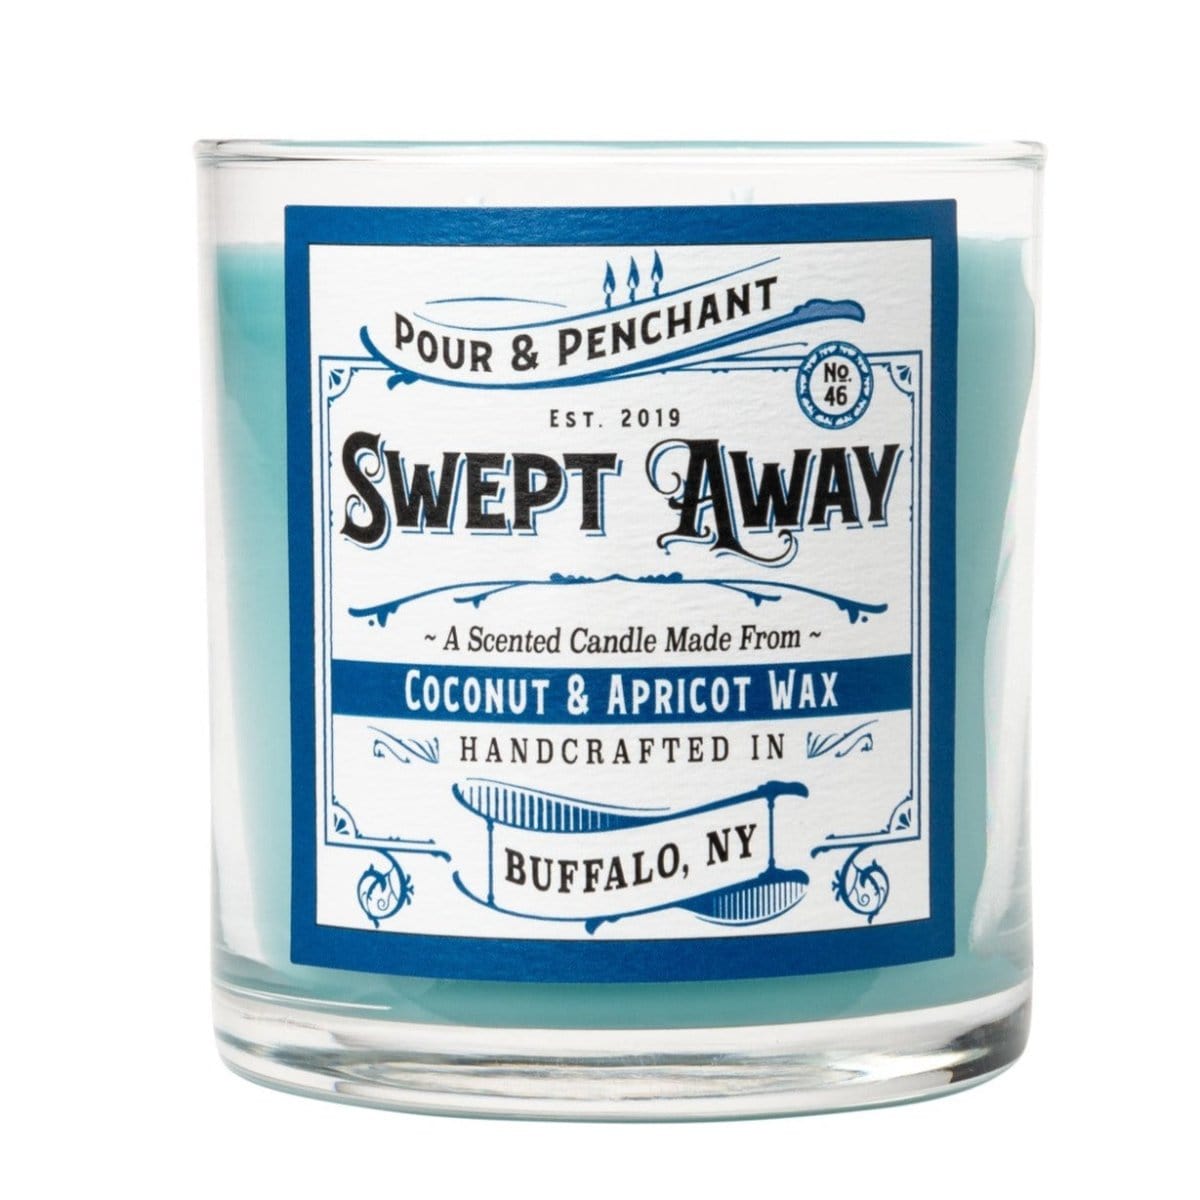 Pour & Penchant 10 oz Scented Candle - SWEPT AWAY no.46 - Sea Salt, Ozone, Violet, Jasmine